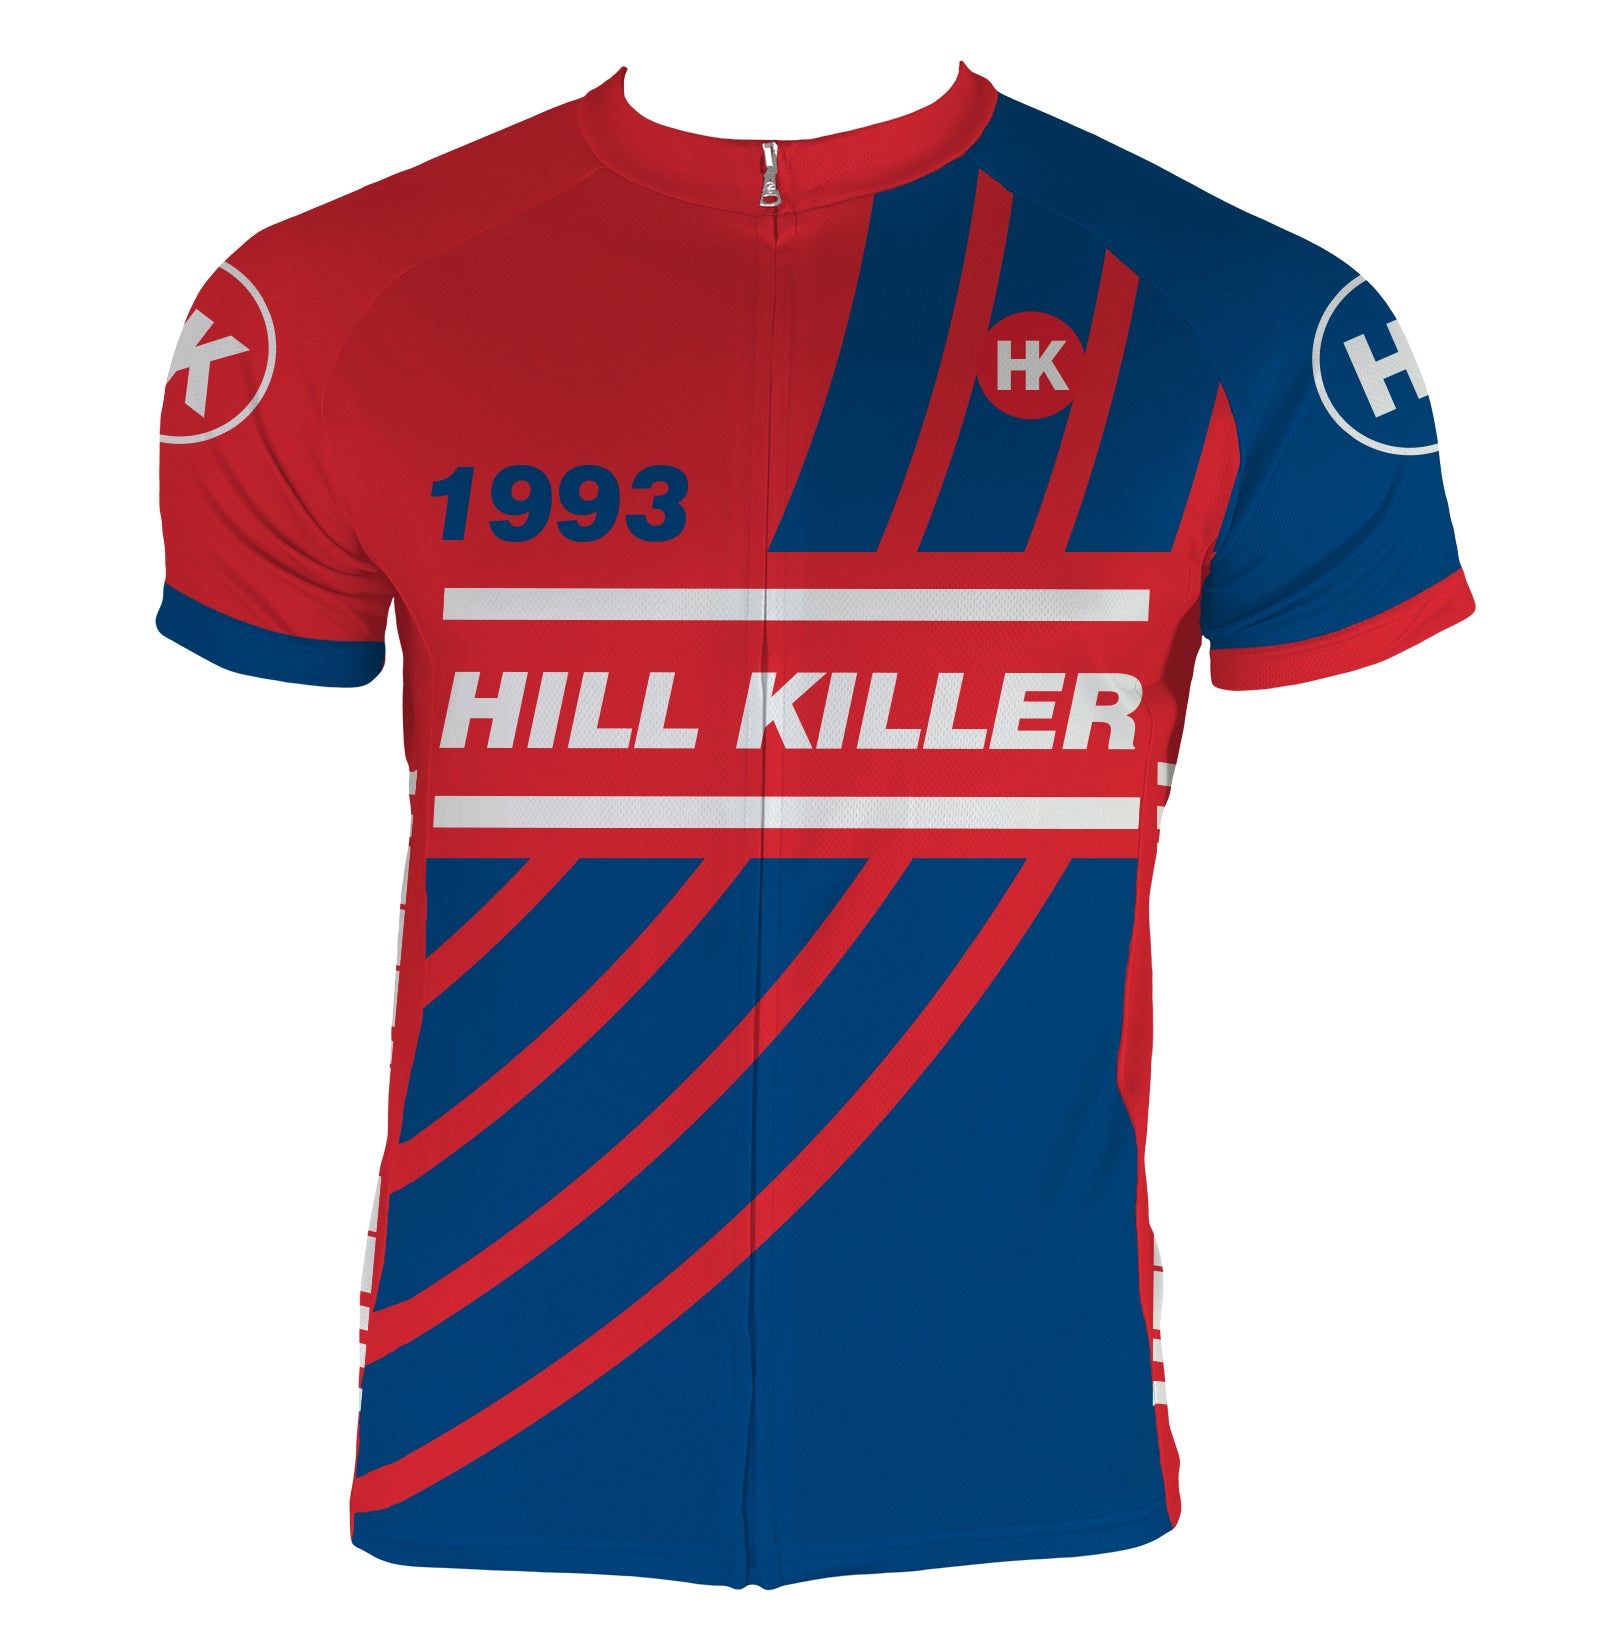 Throwback 1993 Men's Club-Cut Cycling Jersey by Hill Killer